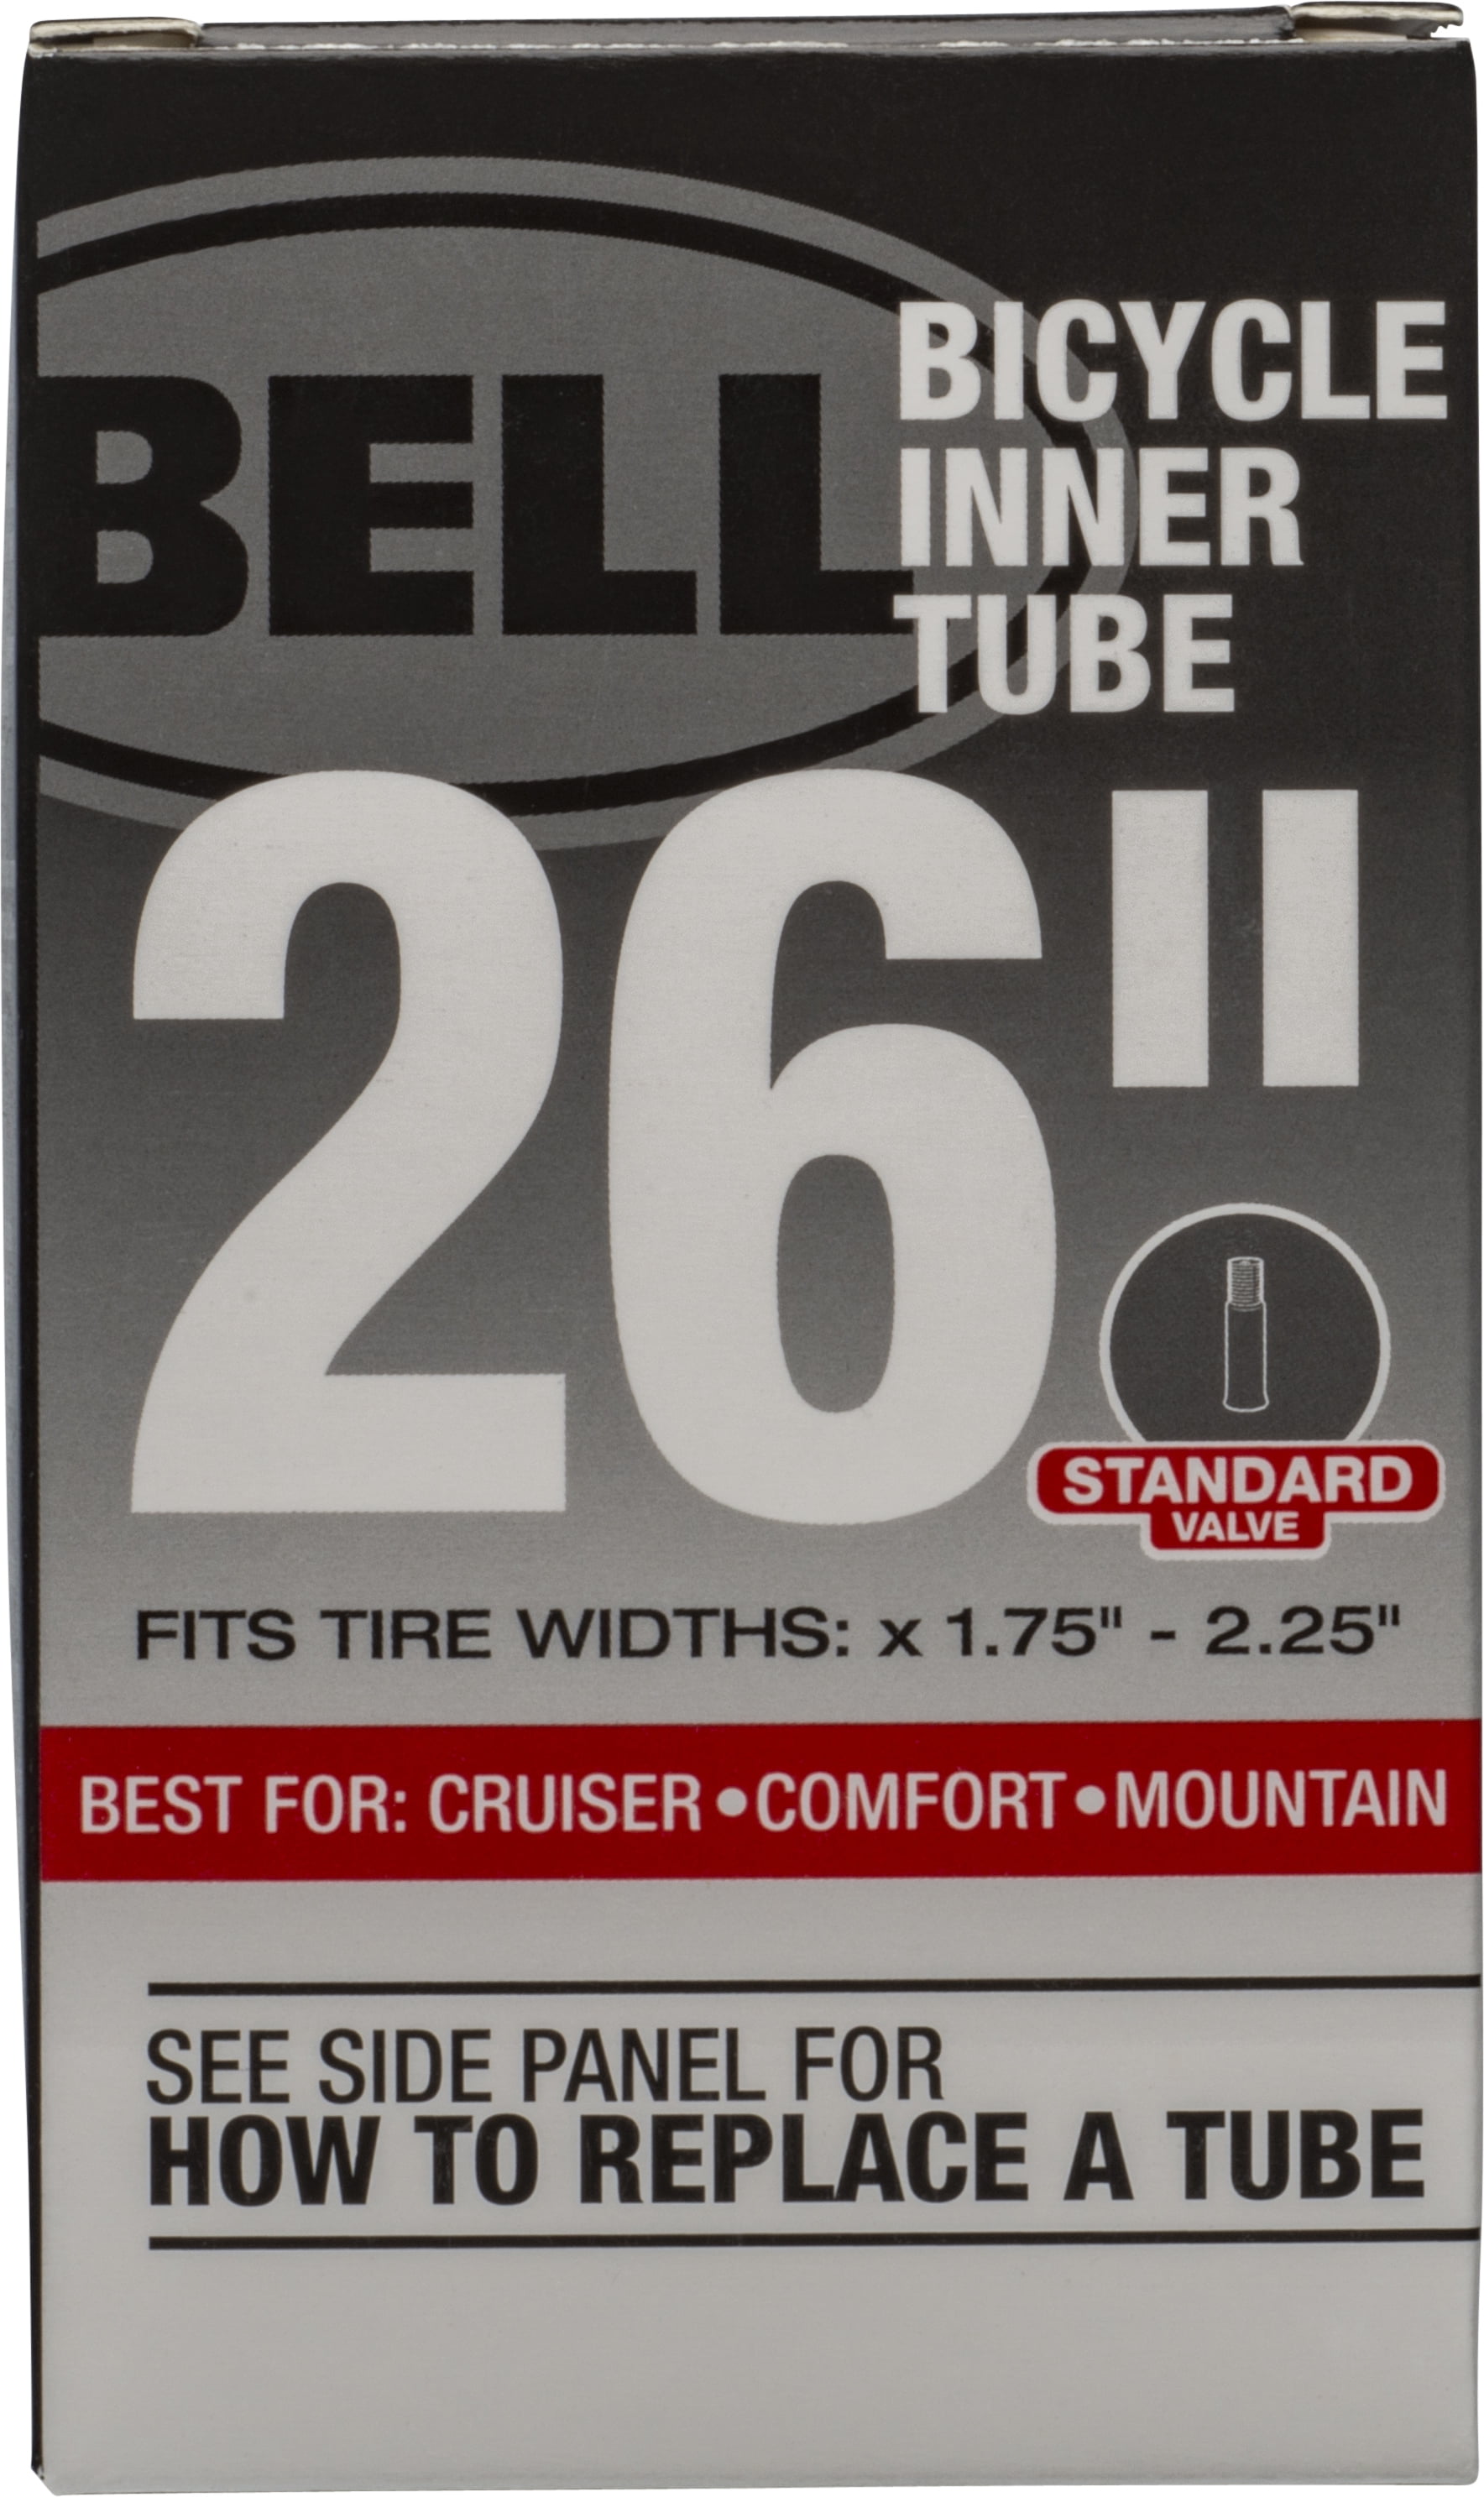 4-Pack Bell 26” Bicycle Inner Tubes Standard Valve Widths 1.75"- 2.25" 